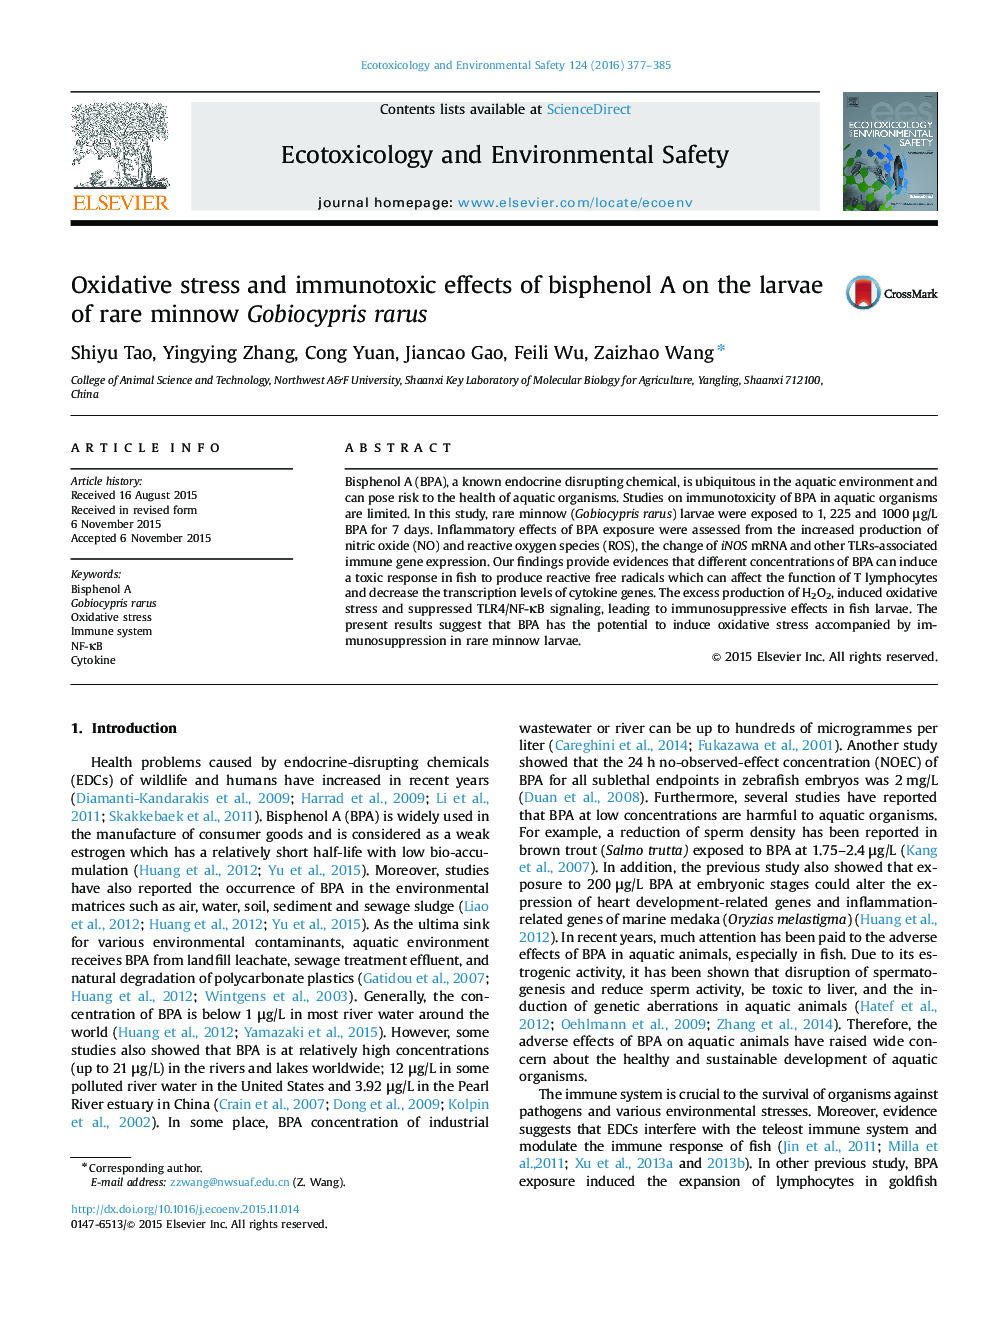 Oxidative stress and immunotoxic effects of bisphenol A on the larvae of rare minnow Gobiocypris rarus